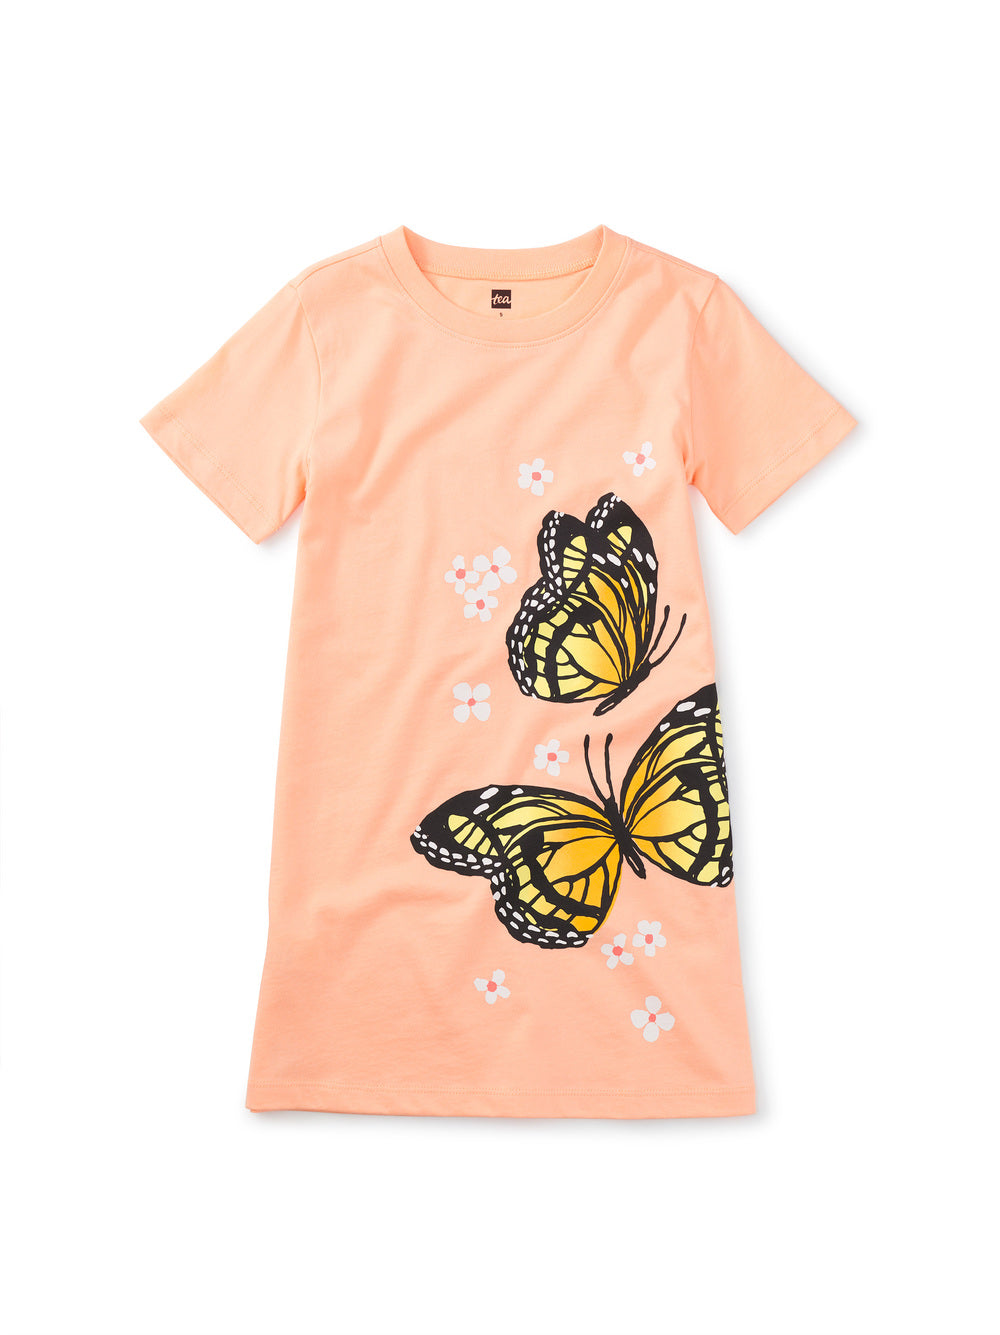 Tea Collection T-Shirt Dress - Monarch Butterfly